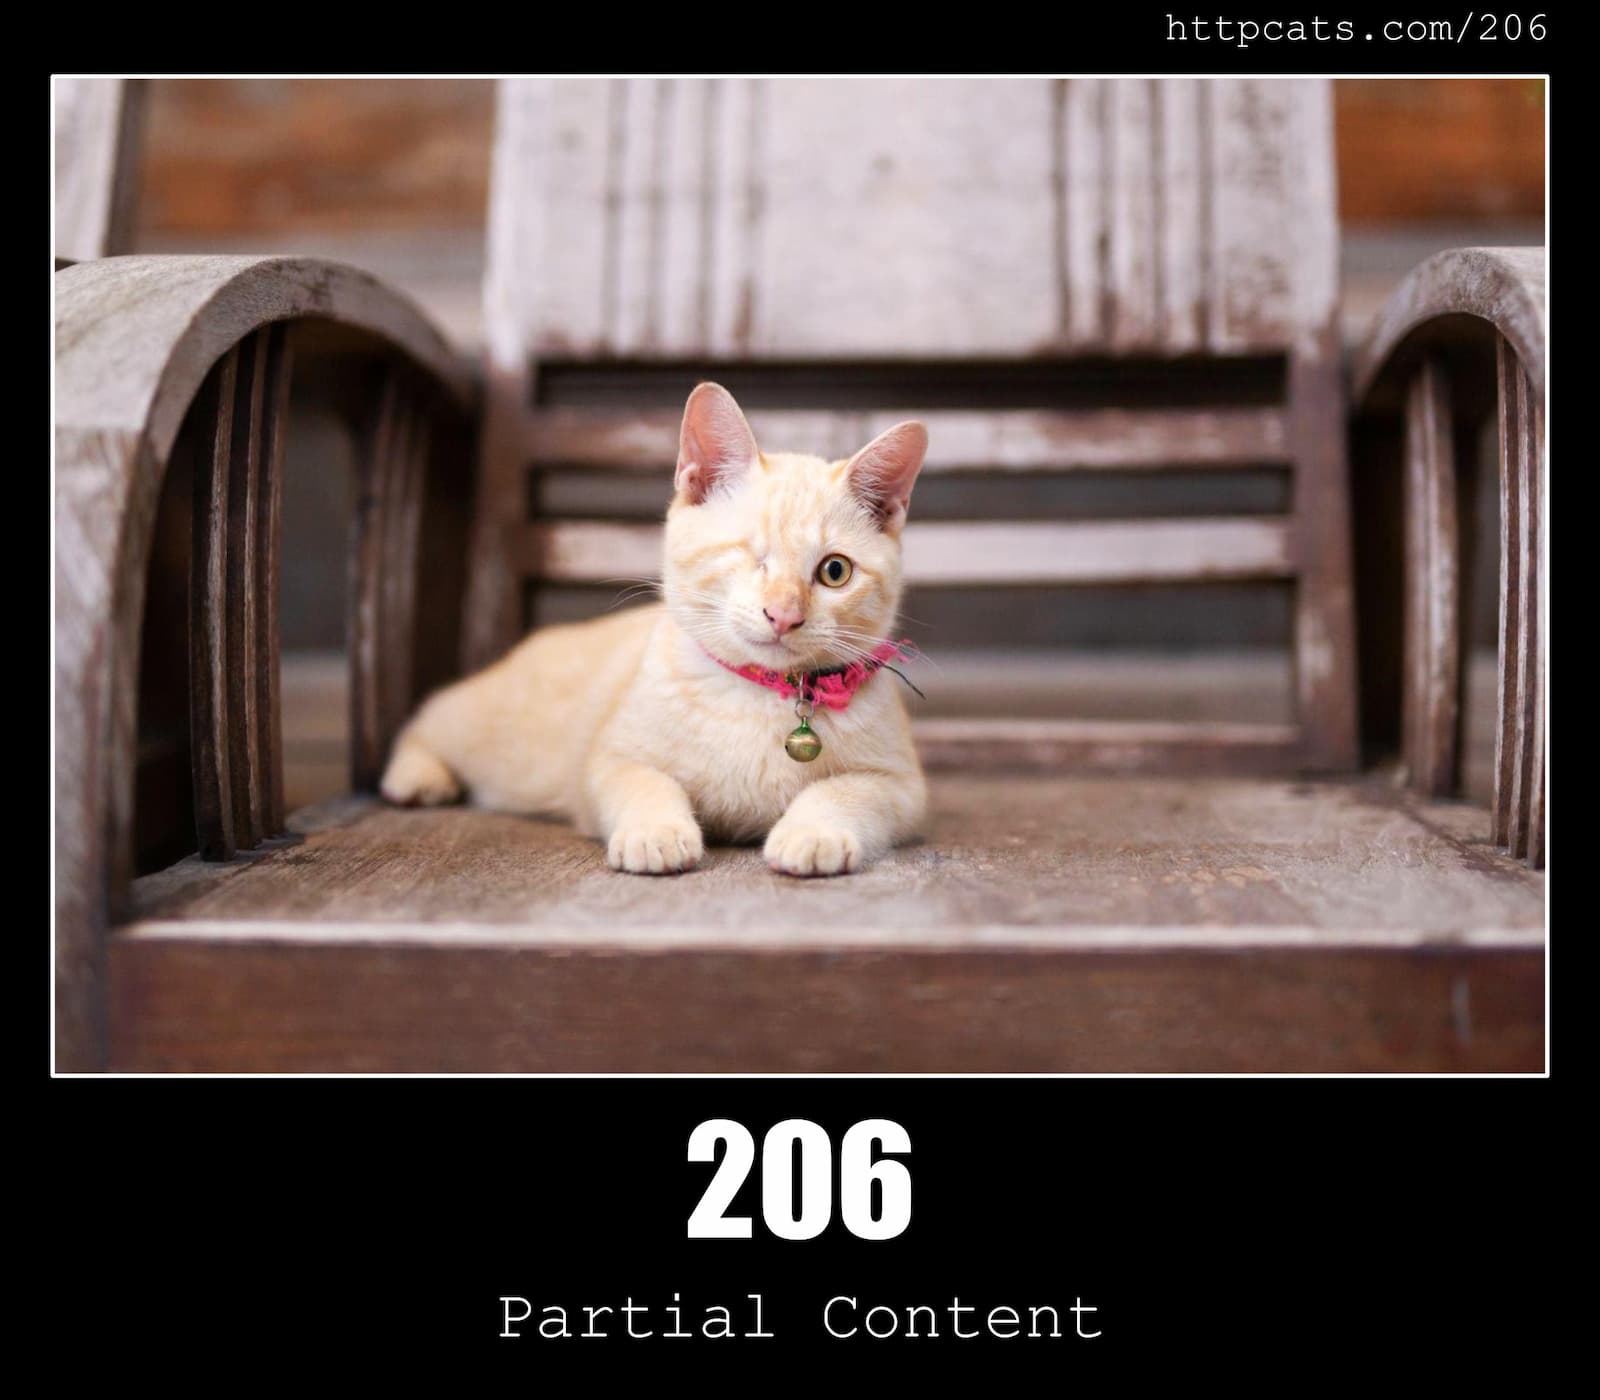 HTTP Status Code 206 Partial Content  & Cats